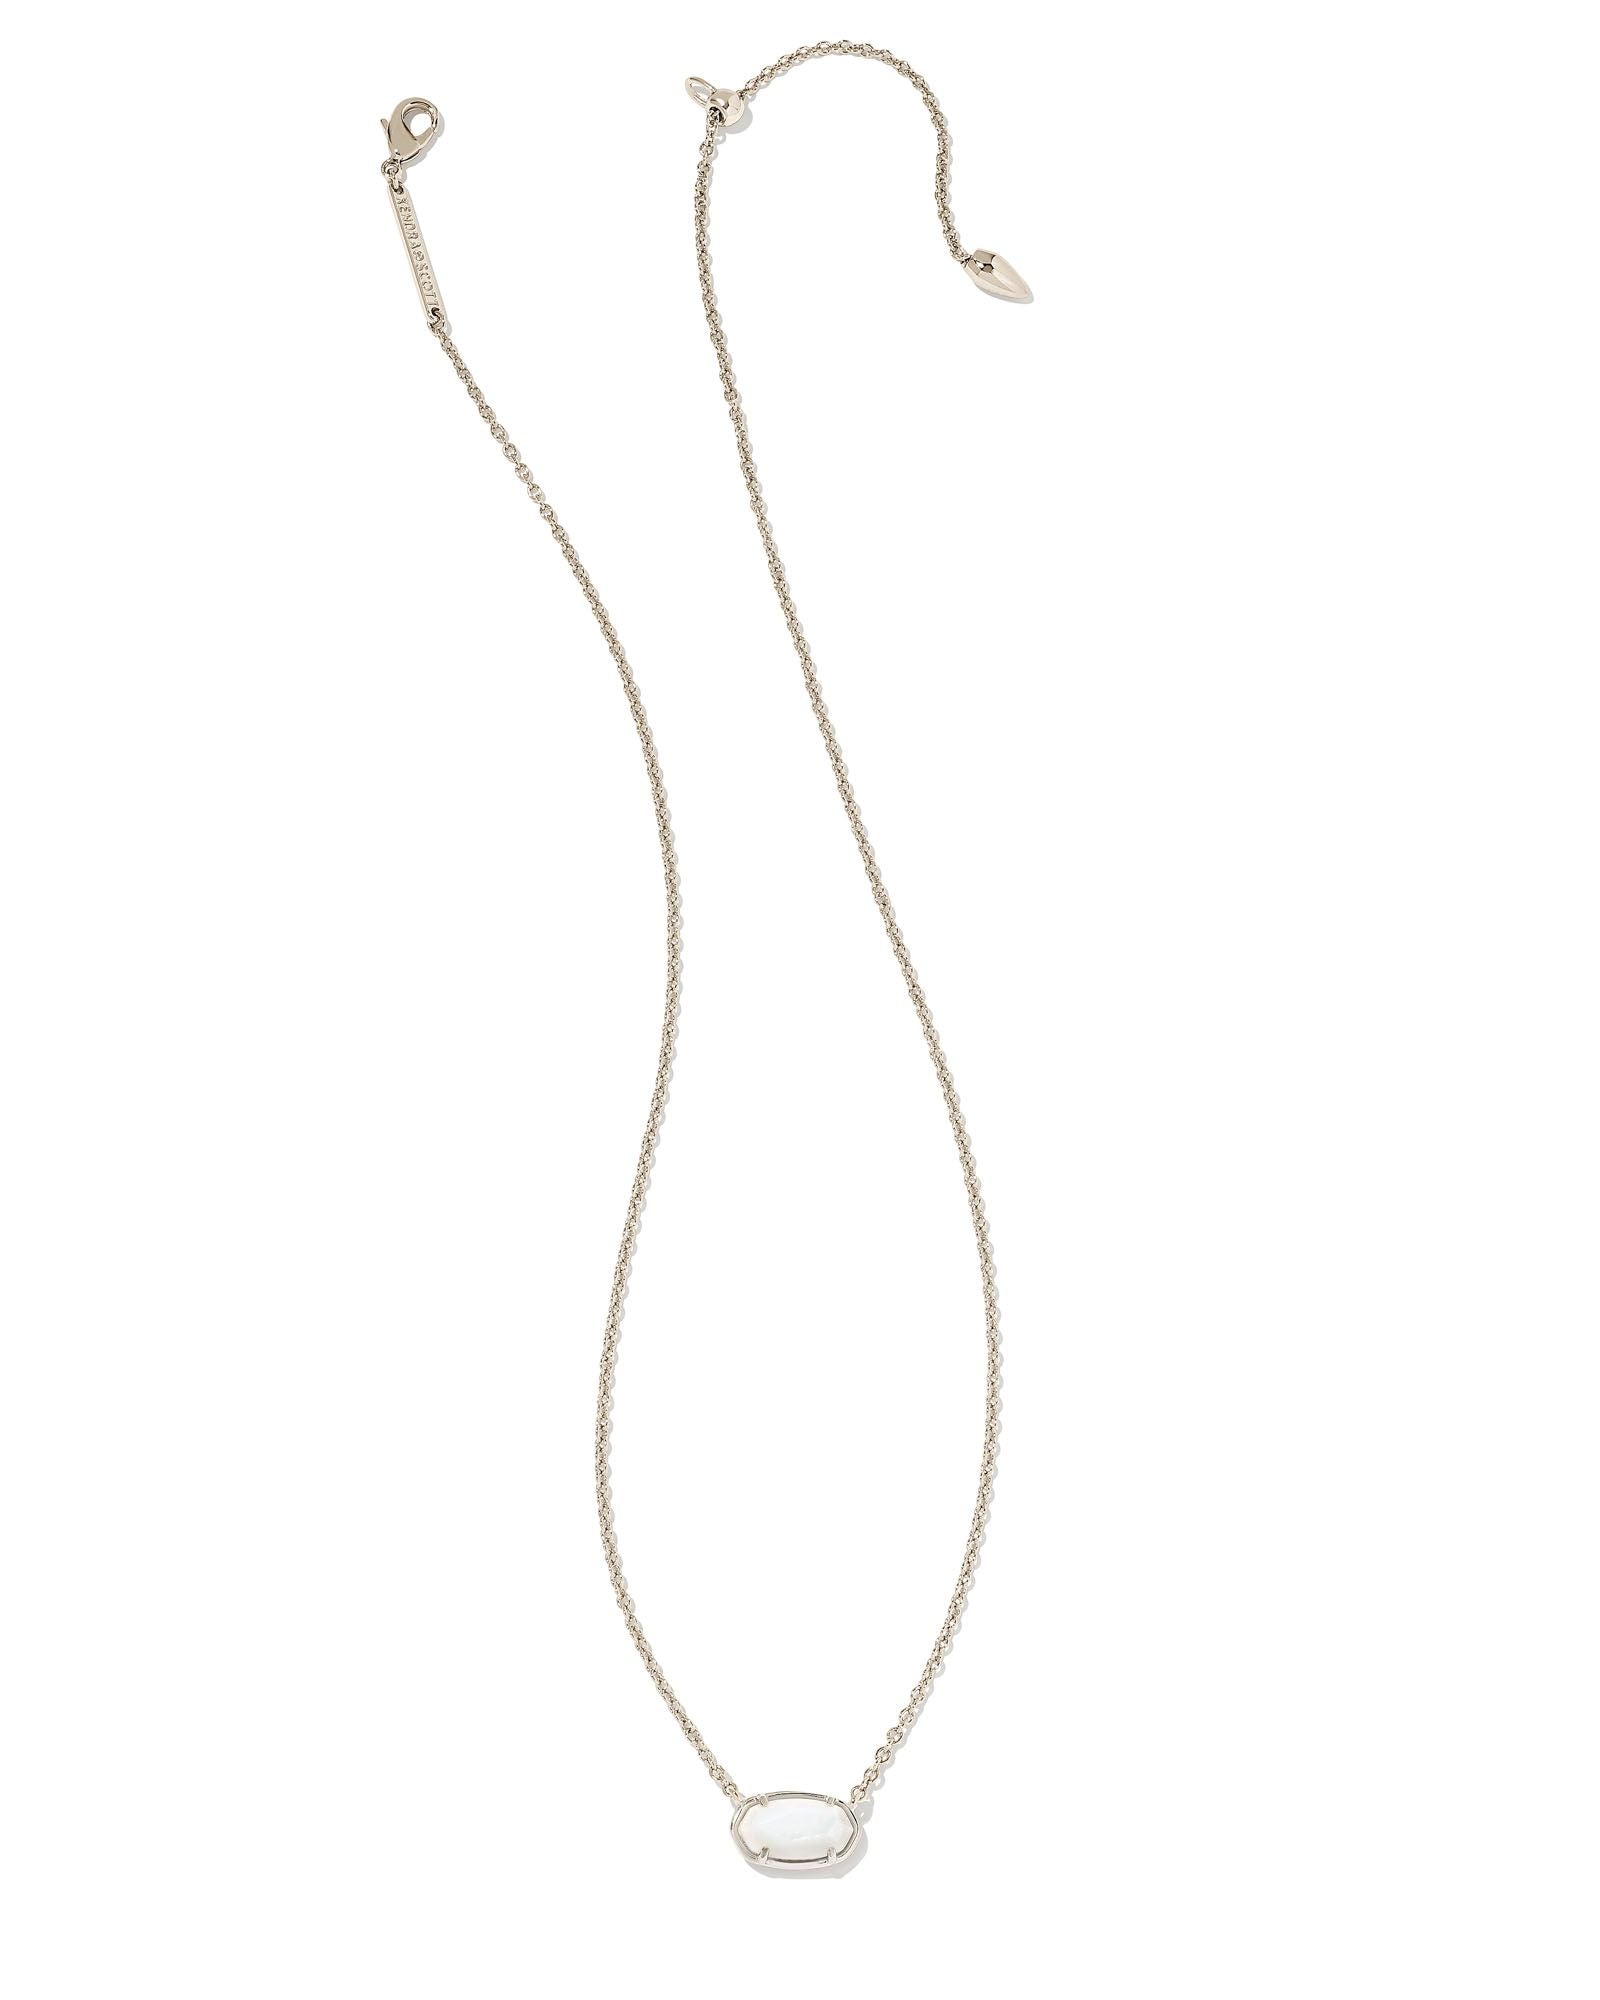 Grayson Short Pendant Necklace White MOP Silver